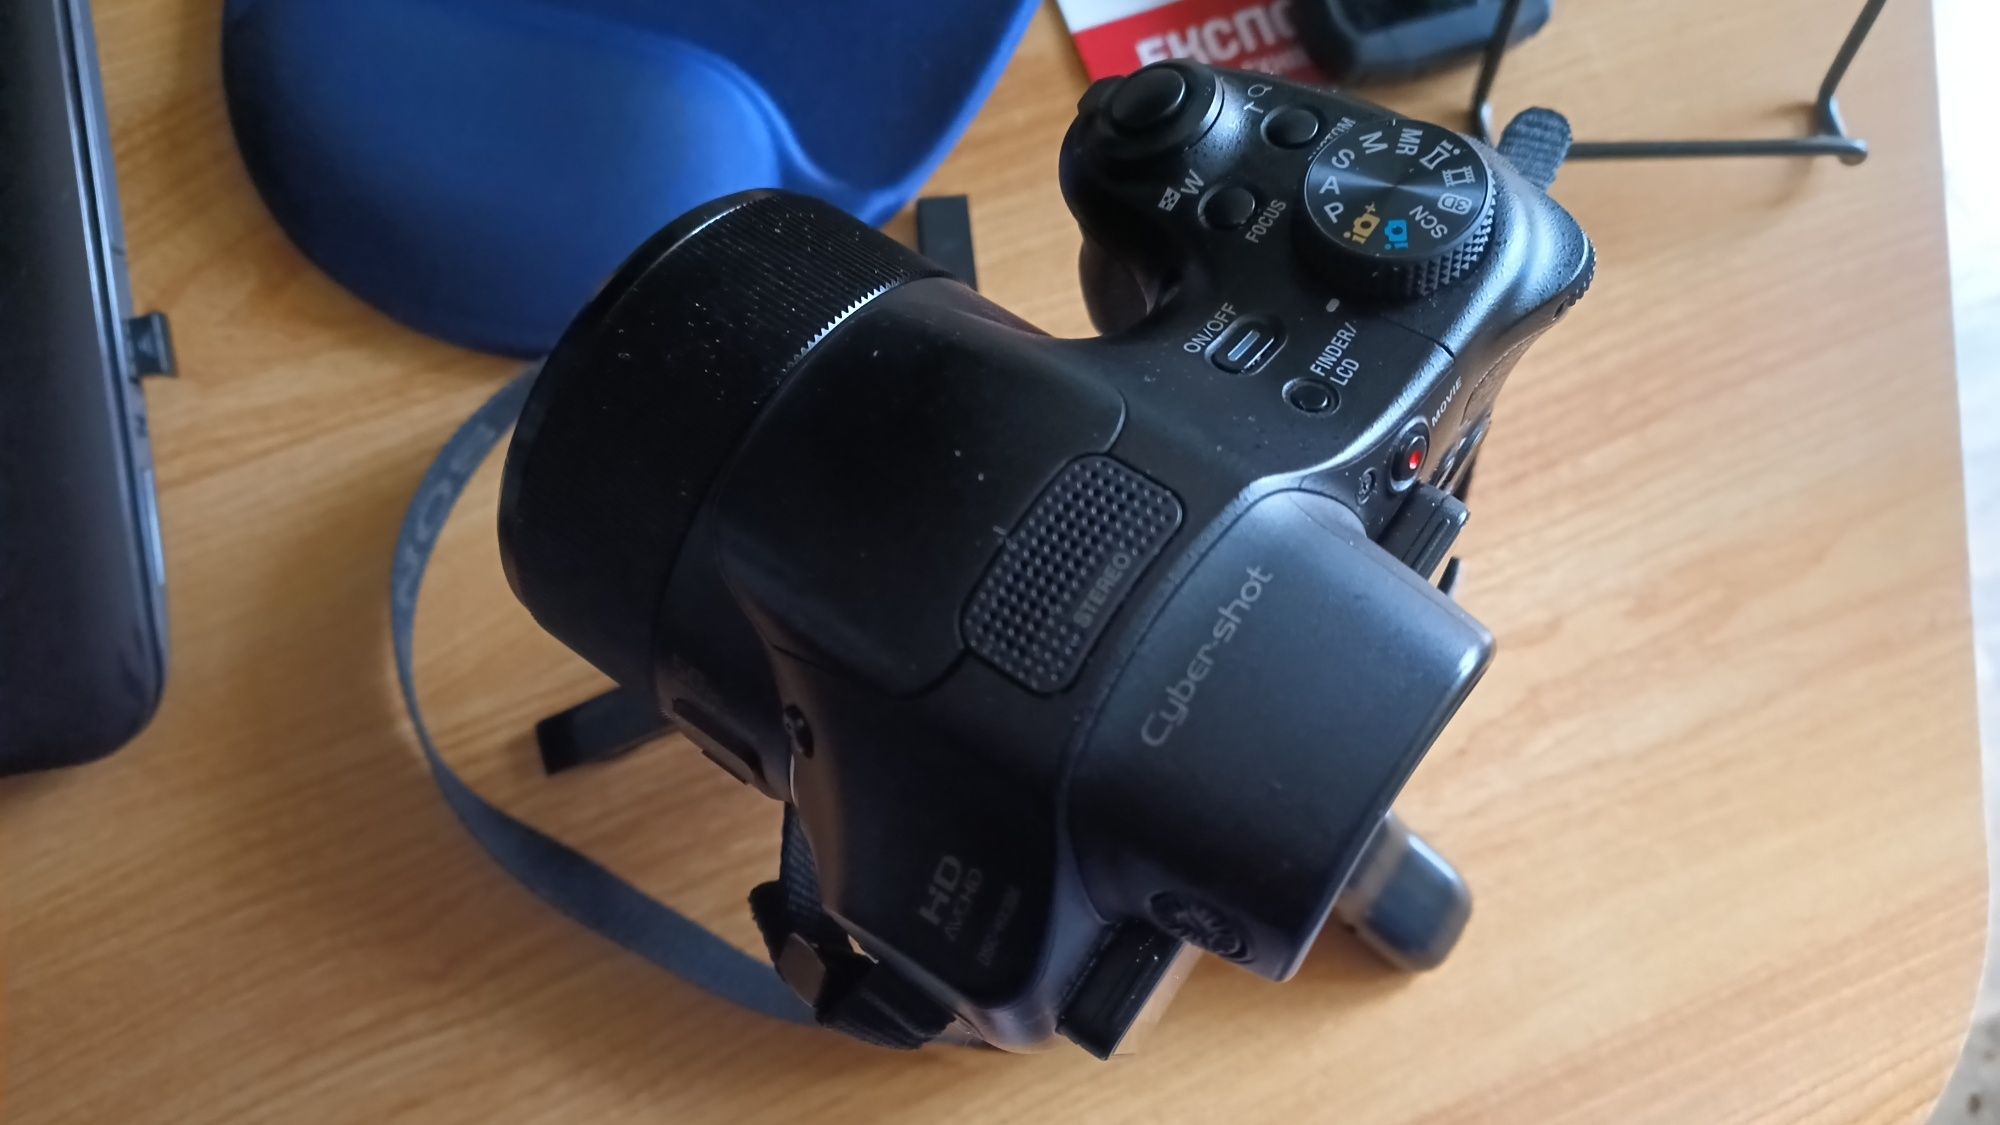 Фотокамера Sony HX300 суперзум 50